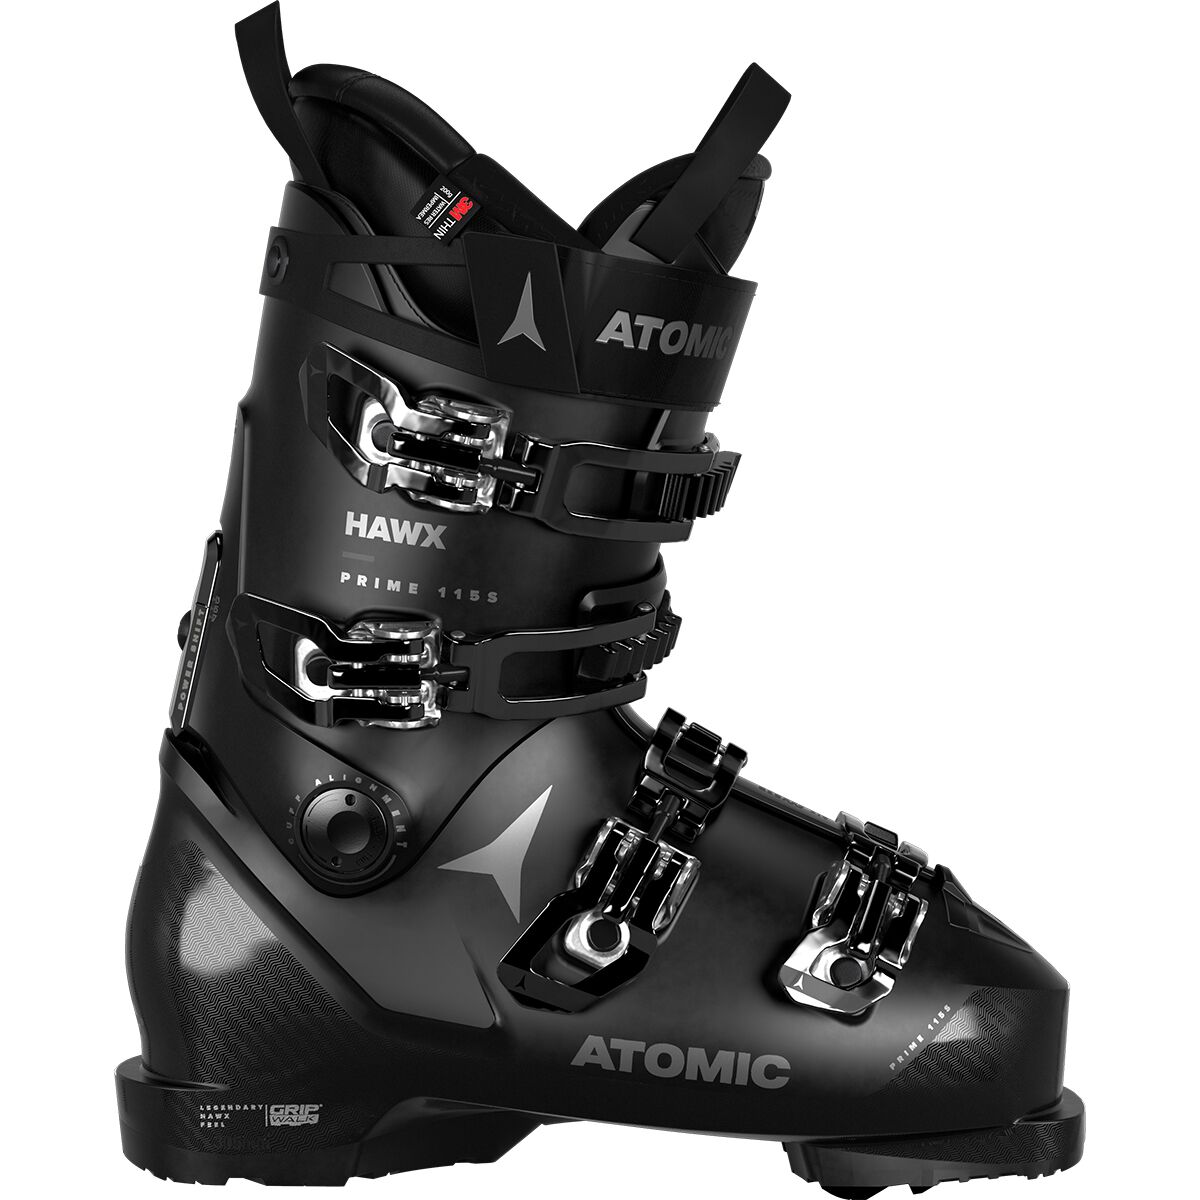 Hawx Prime 115 S Ski Boot - Women